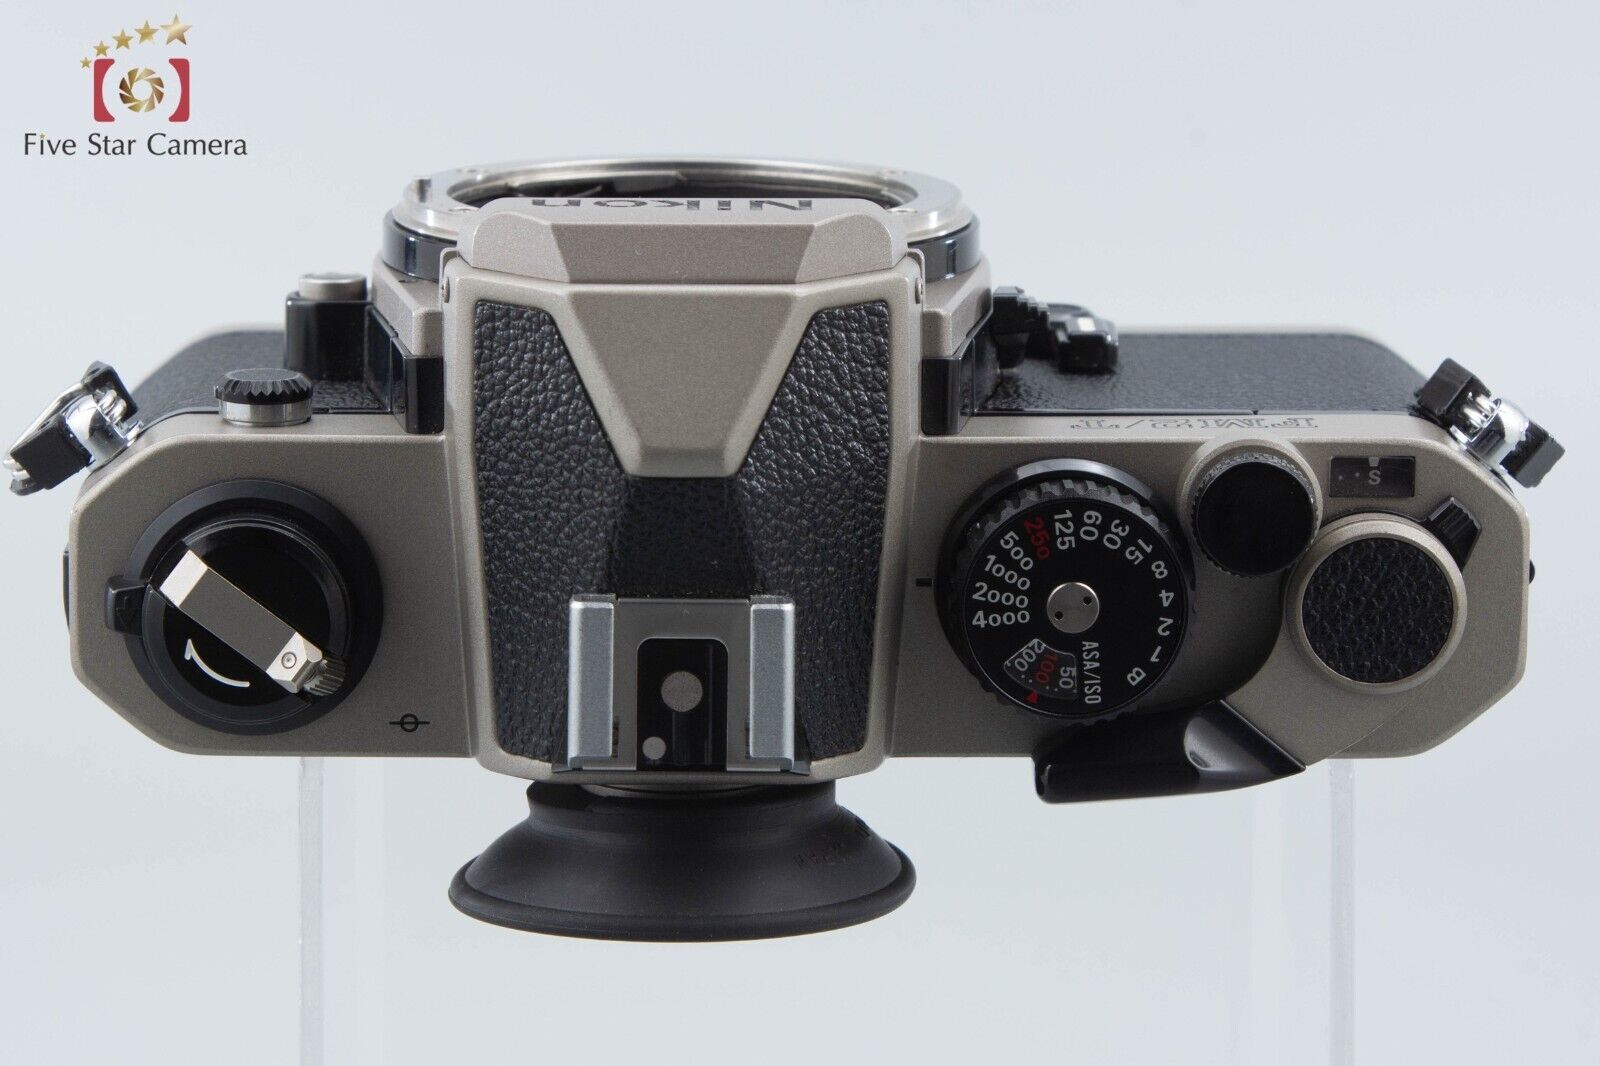 Nikon FM2/T Titanium 35mm SLR Film Camera Body